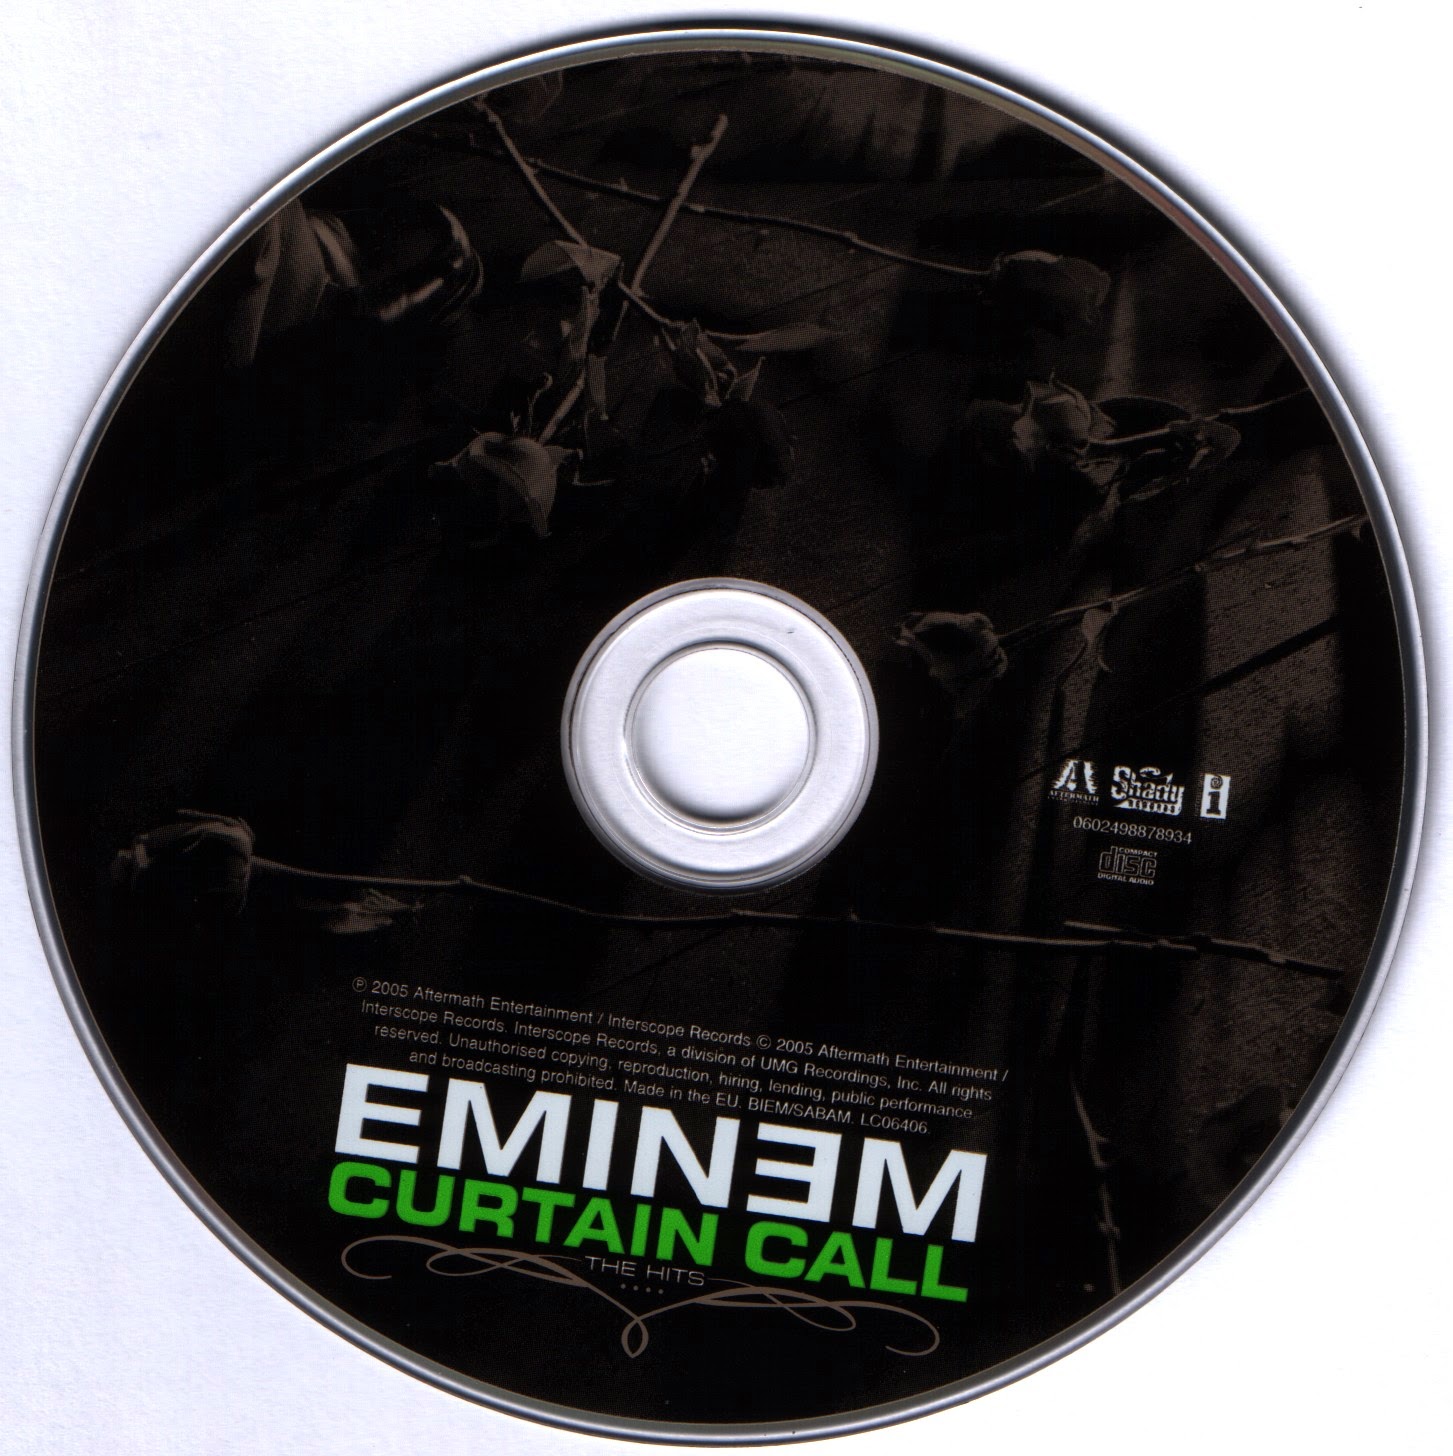 Eminem curtain. Eminem. Curtain Call: the Hits. Eminem Curtain Call. Curtain Call Эминем. Eminem "Curtain Call (CD)".